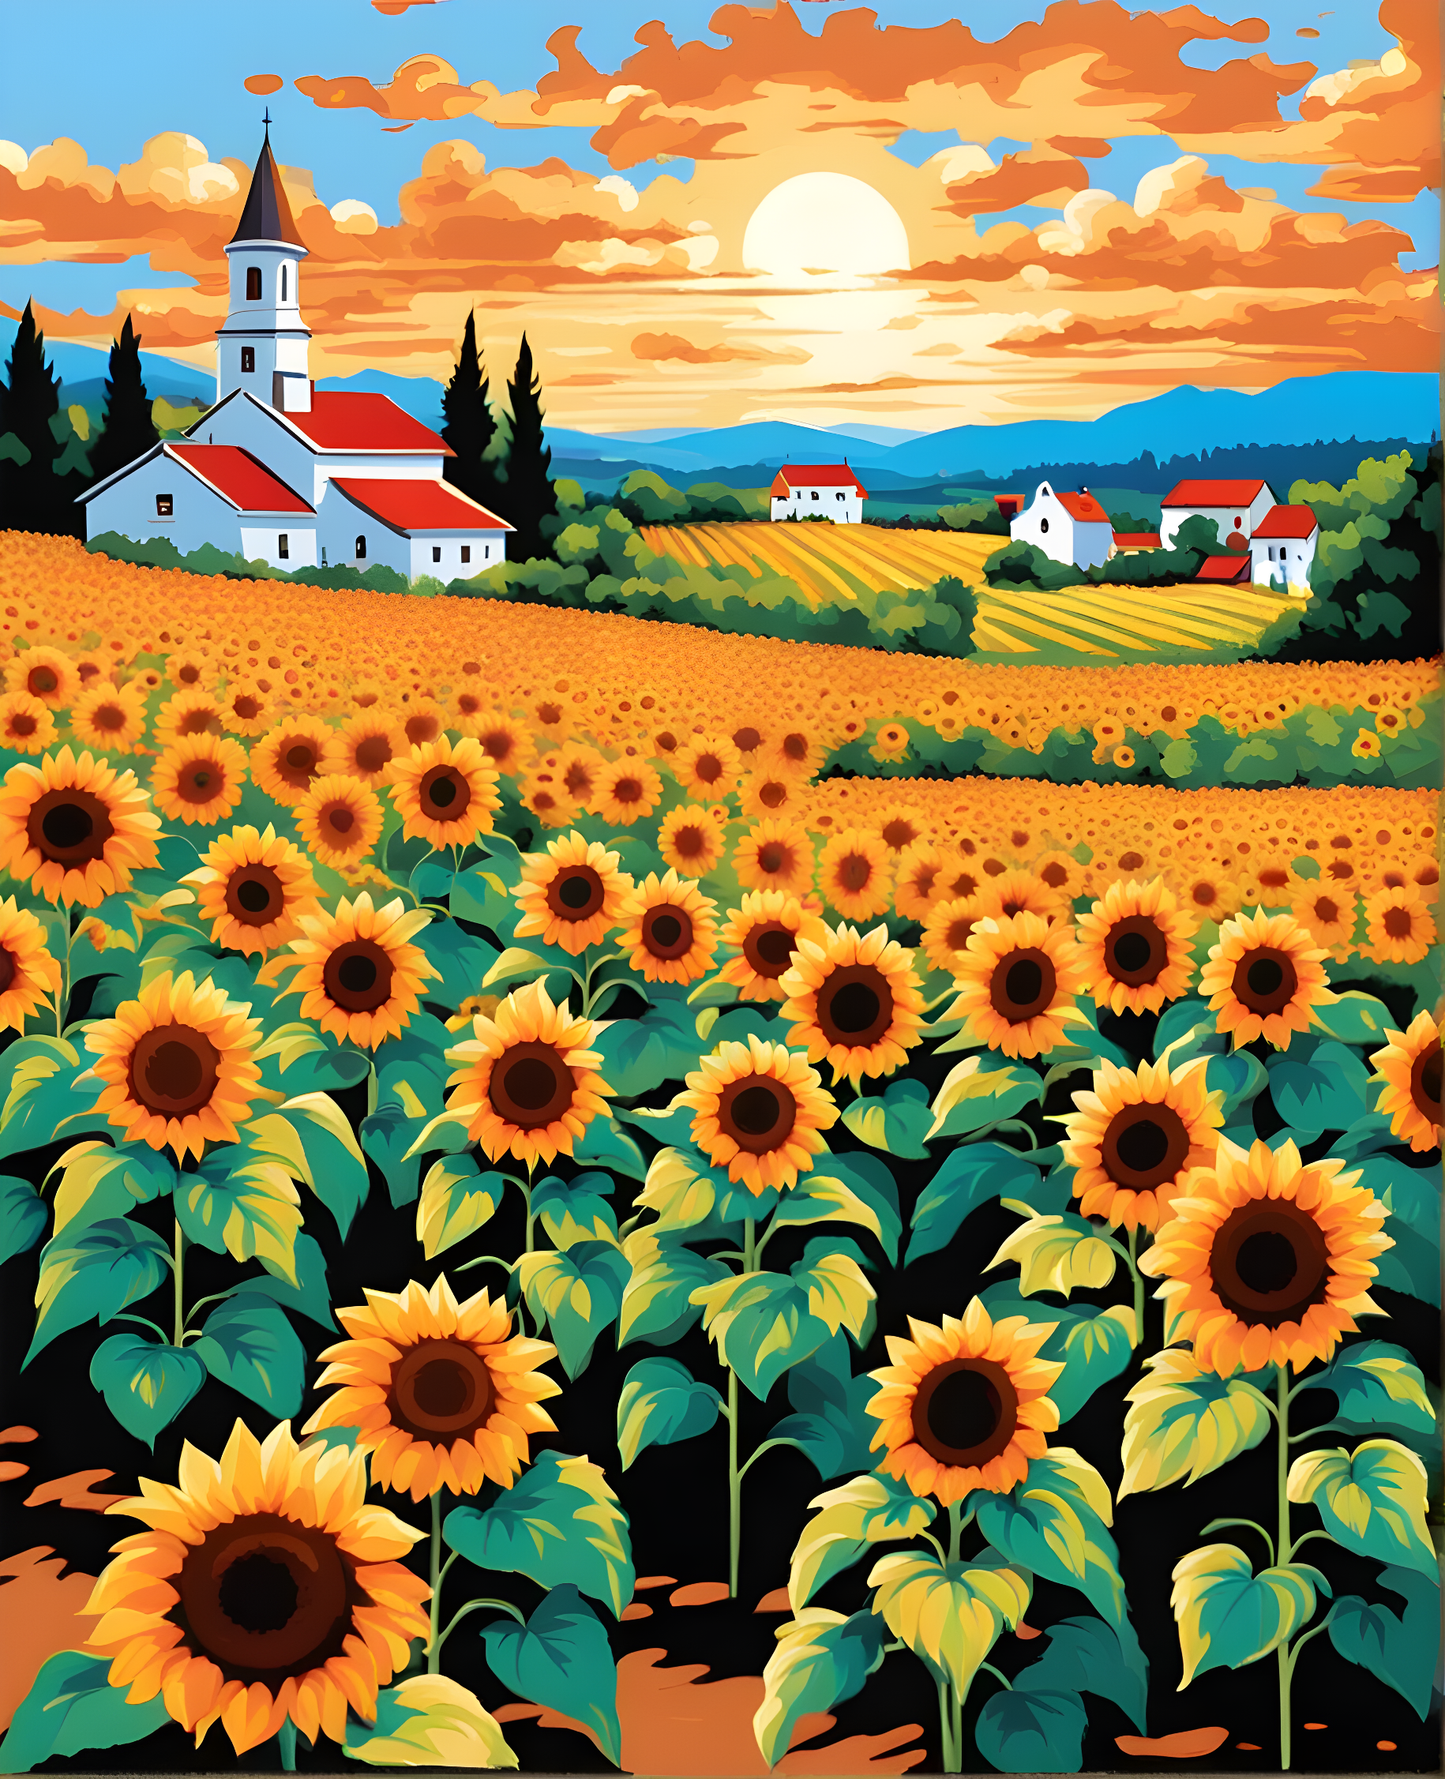 European Village Sunflower Field (1) - Van-Go Paint-By-Number Kit